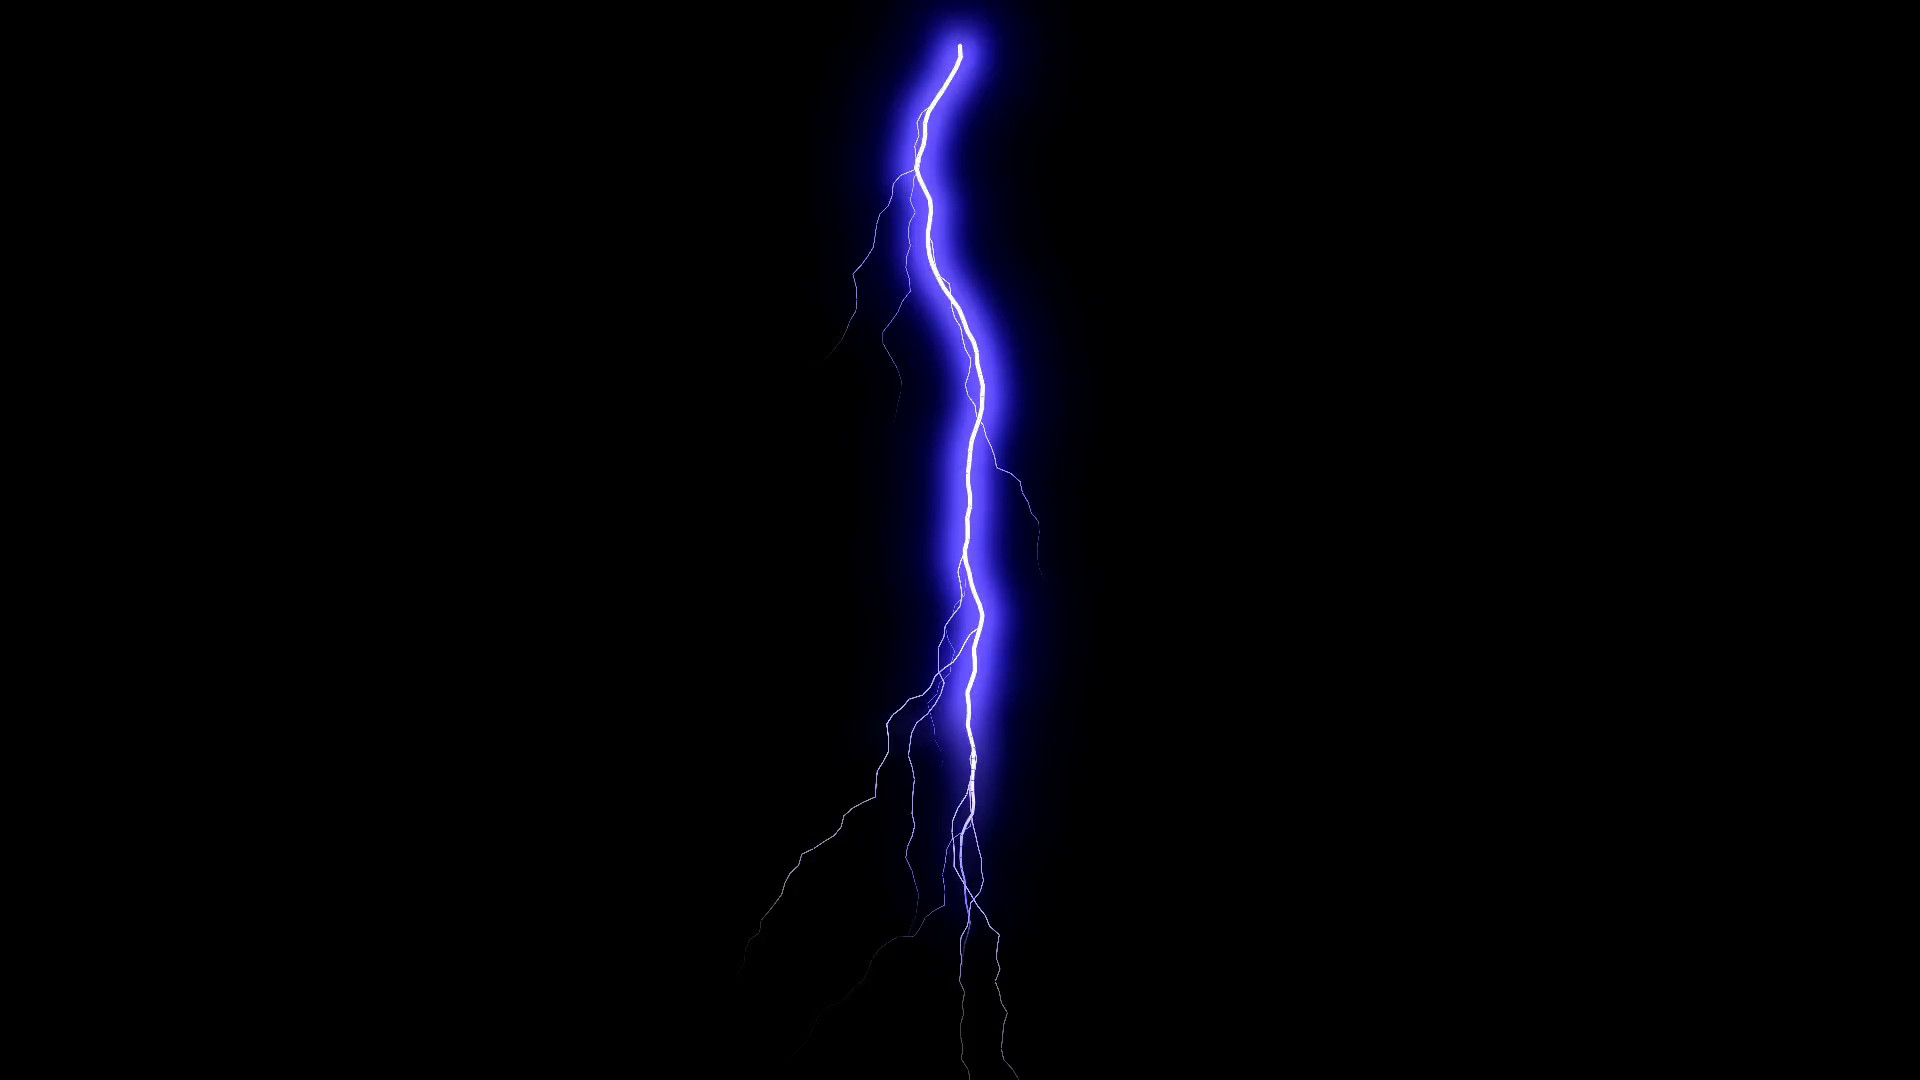 1920x1080 2Several Lightning Strikes Over Black Background. Blue Electrical Storm.  Stock Video Footage - VideoBlocks